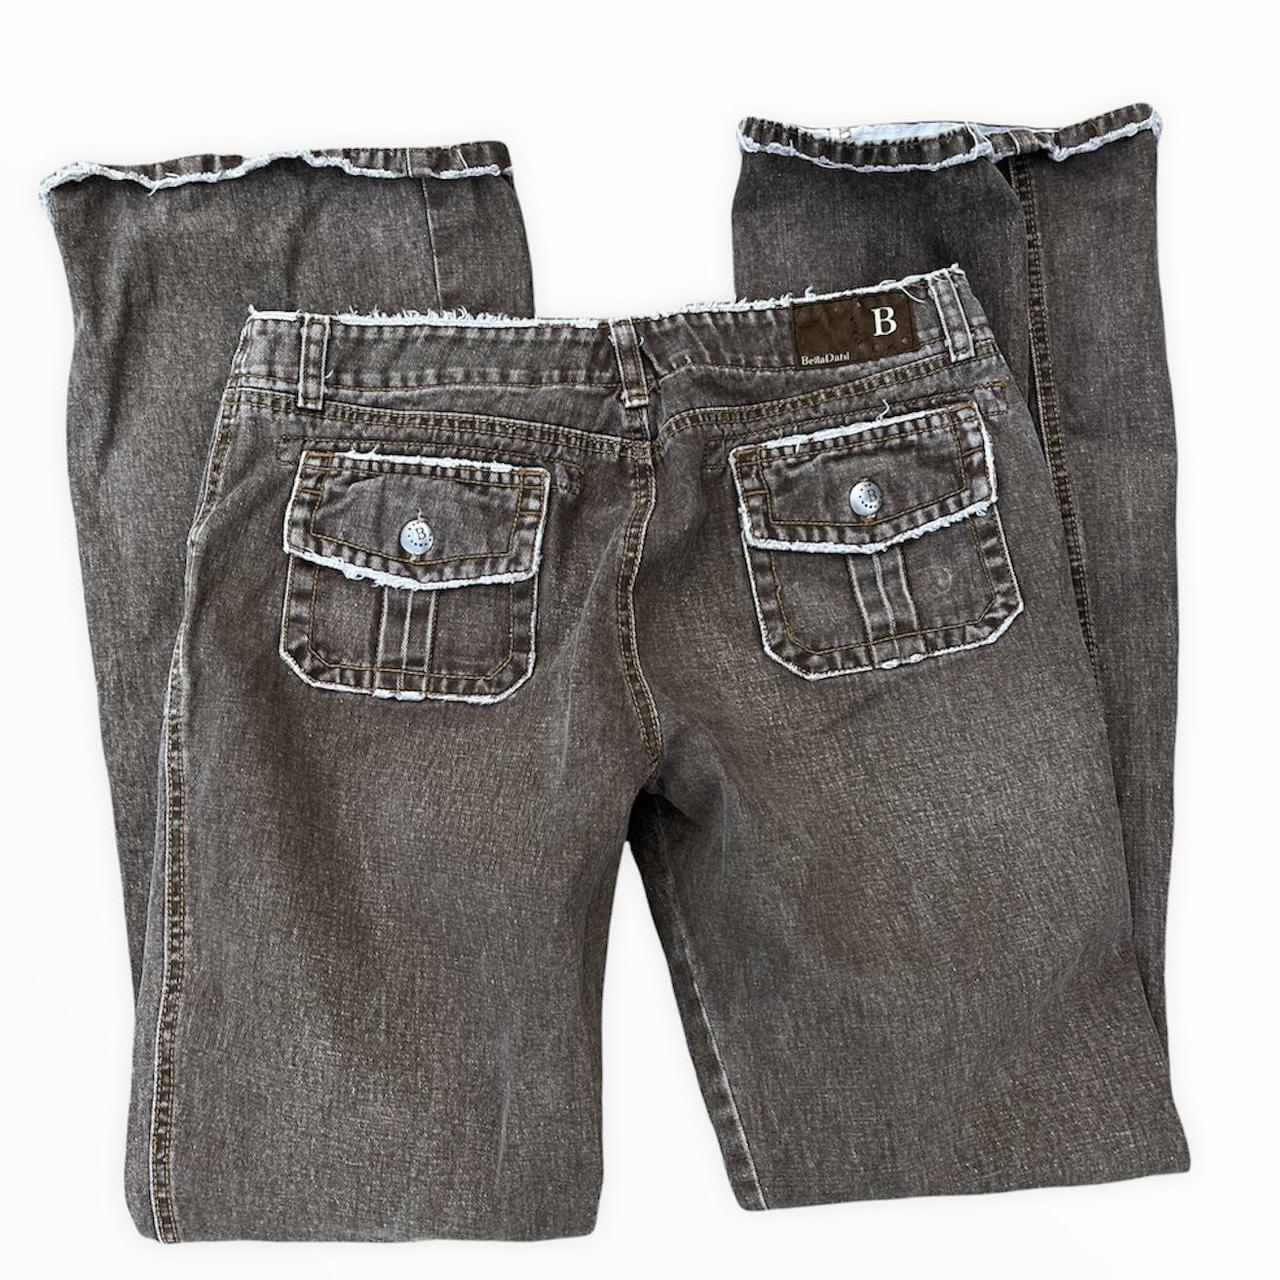 Product Image 2 - Brown Flared Pants

•Women’s Vintage BellaDahl